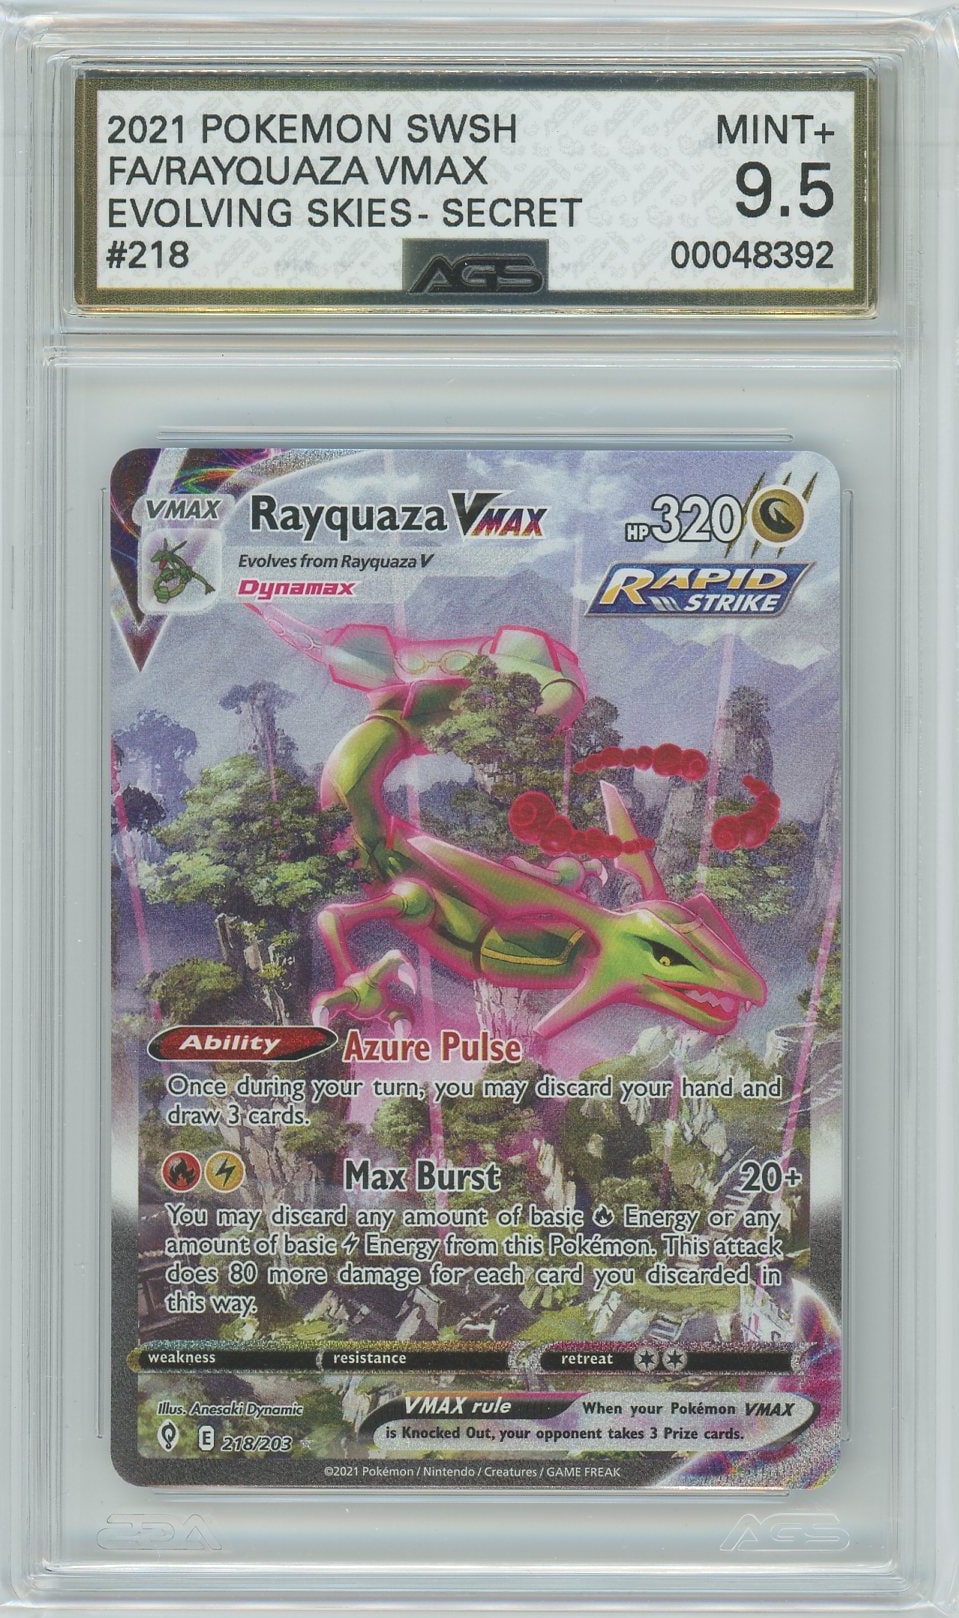 Rayquaza VMAX, Pokémon